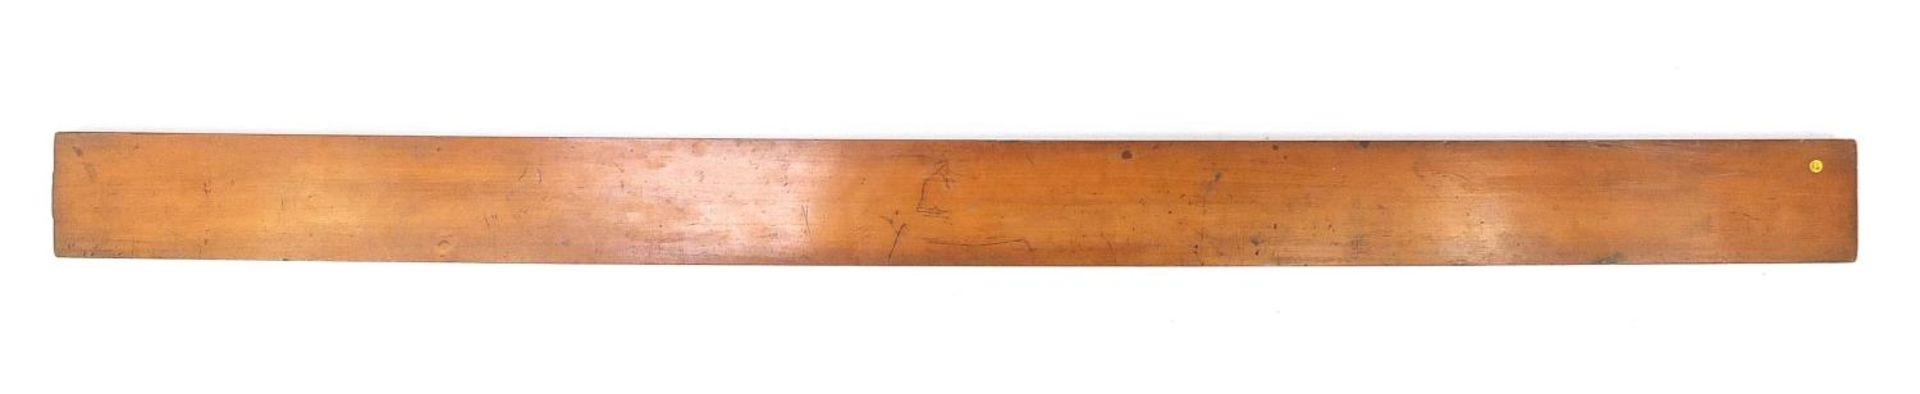 Antique Stanley boxwood three foot sliding rule impressed Stanley Great Turnstile Holborn London, - Image 14 of 14